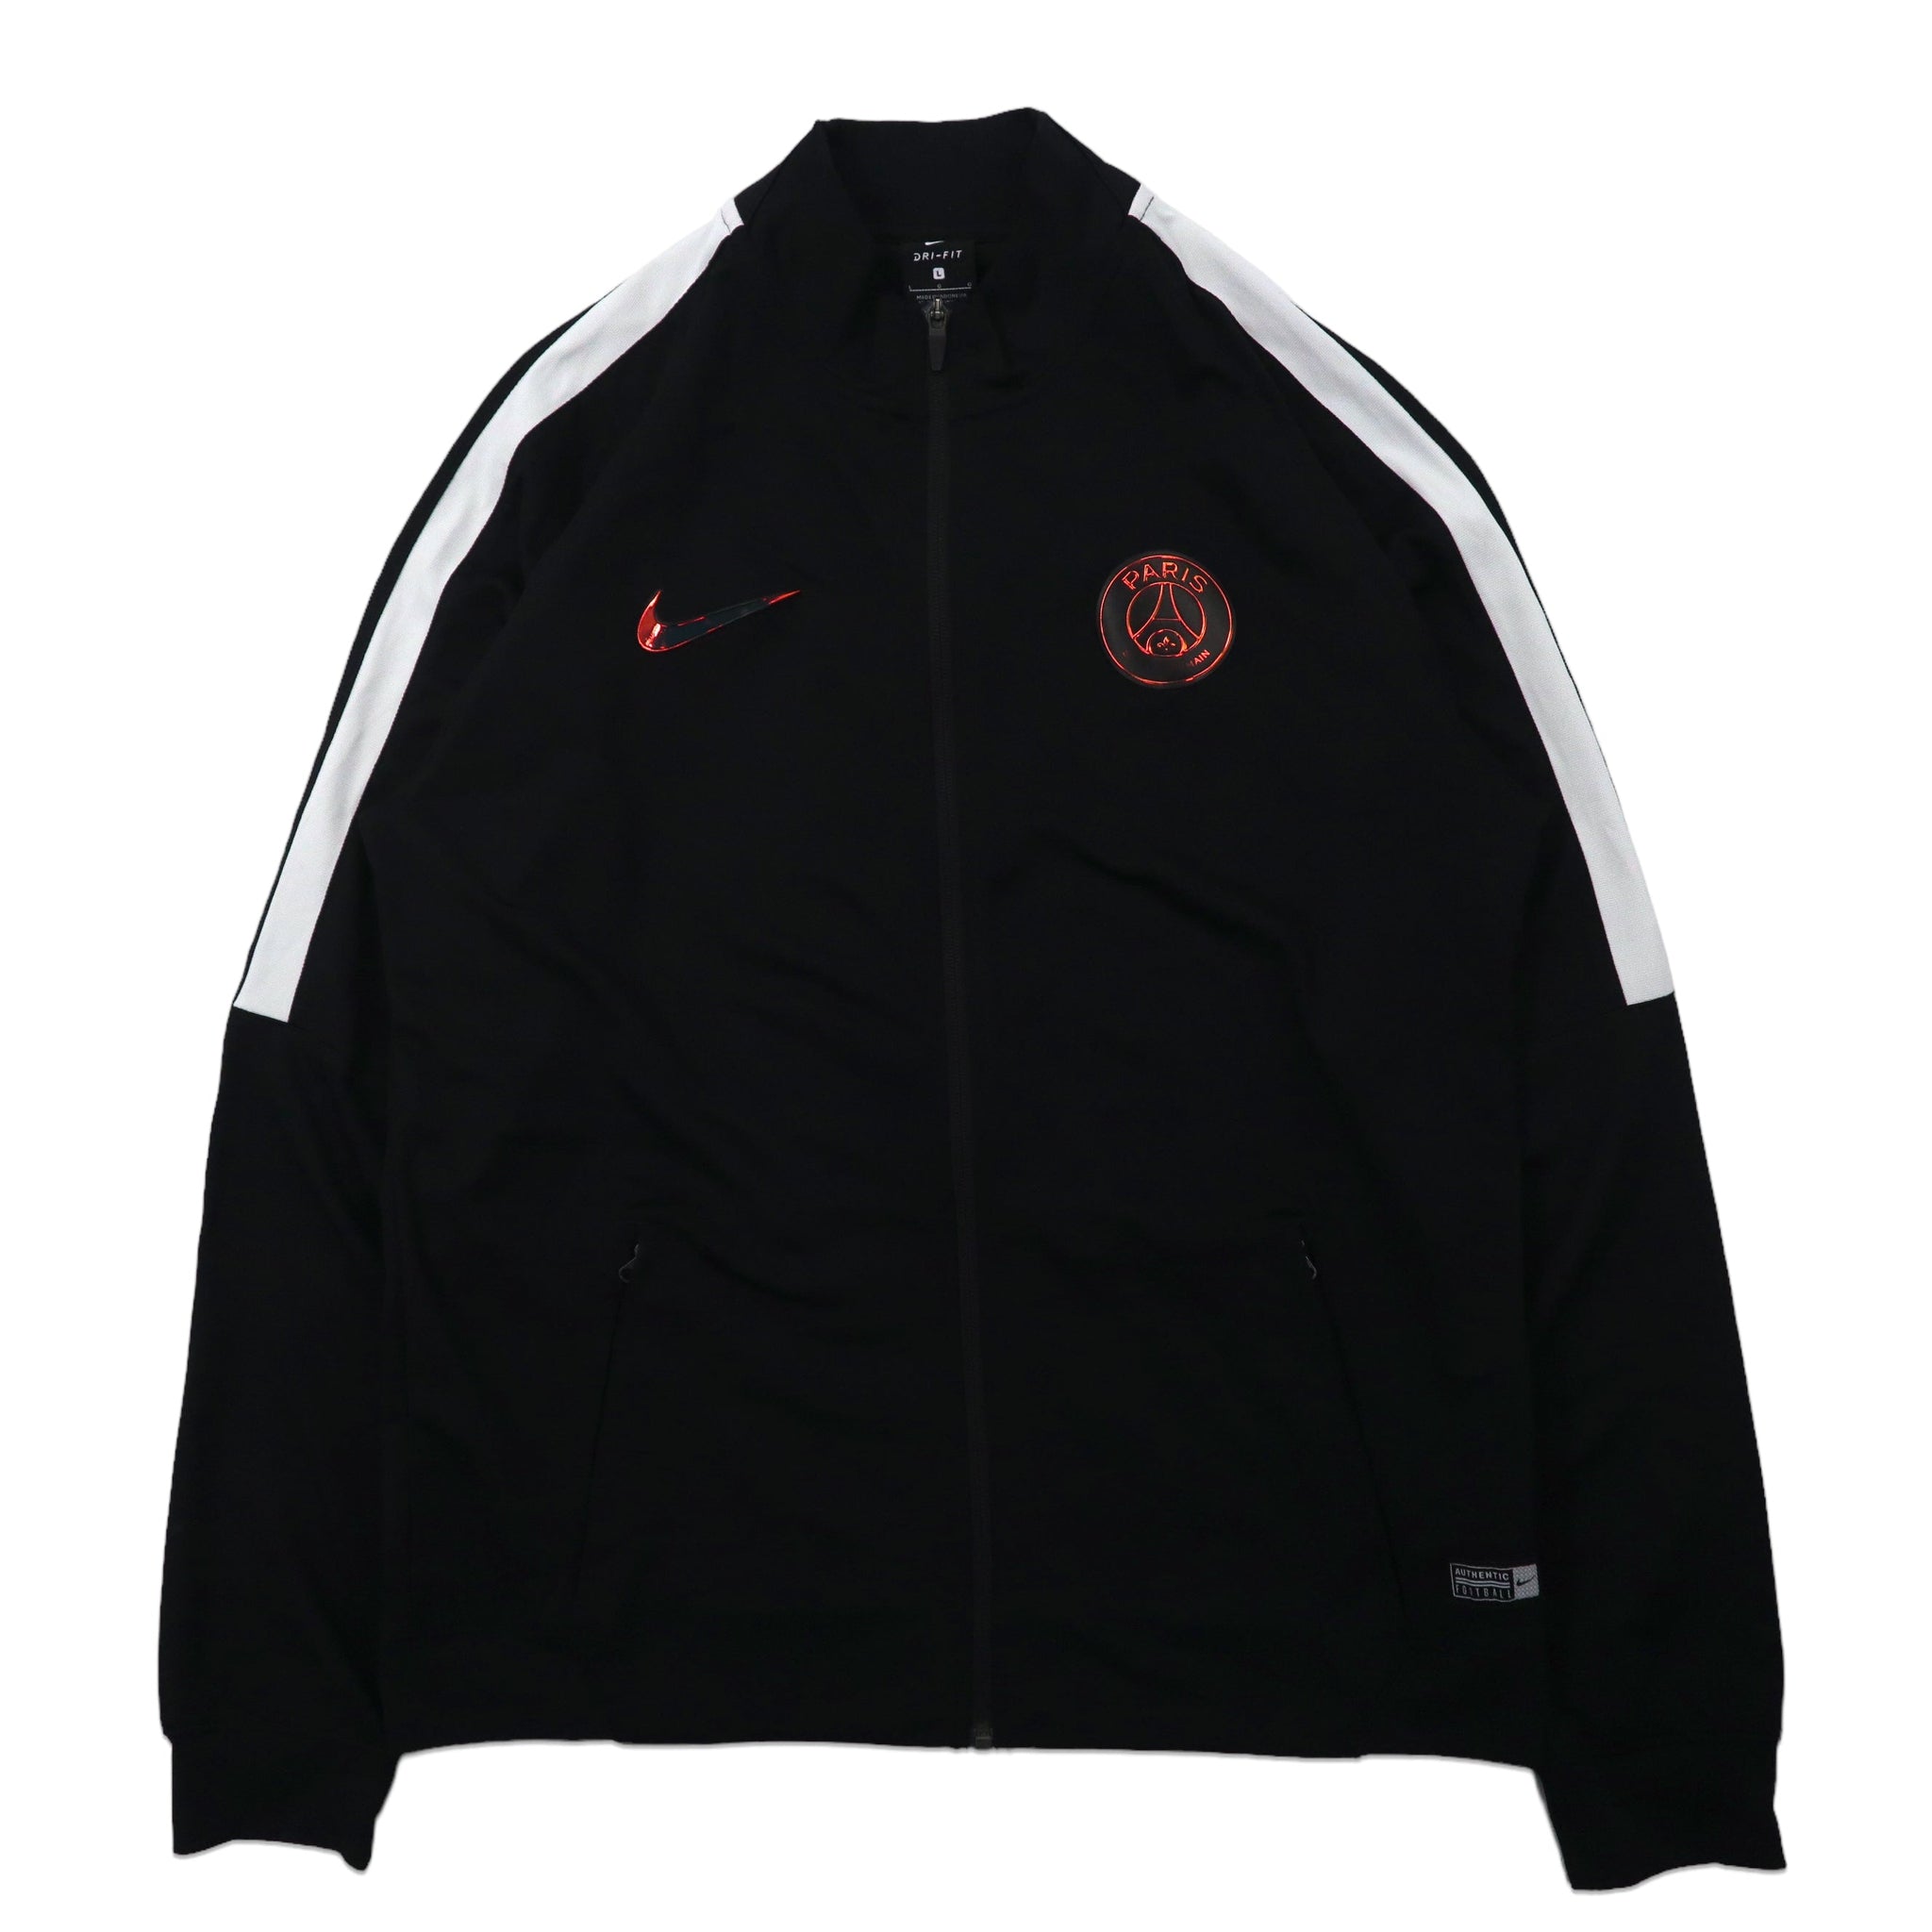 Nike Track Jacket Jersey L Black Paris Saint Germain Paris Saint